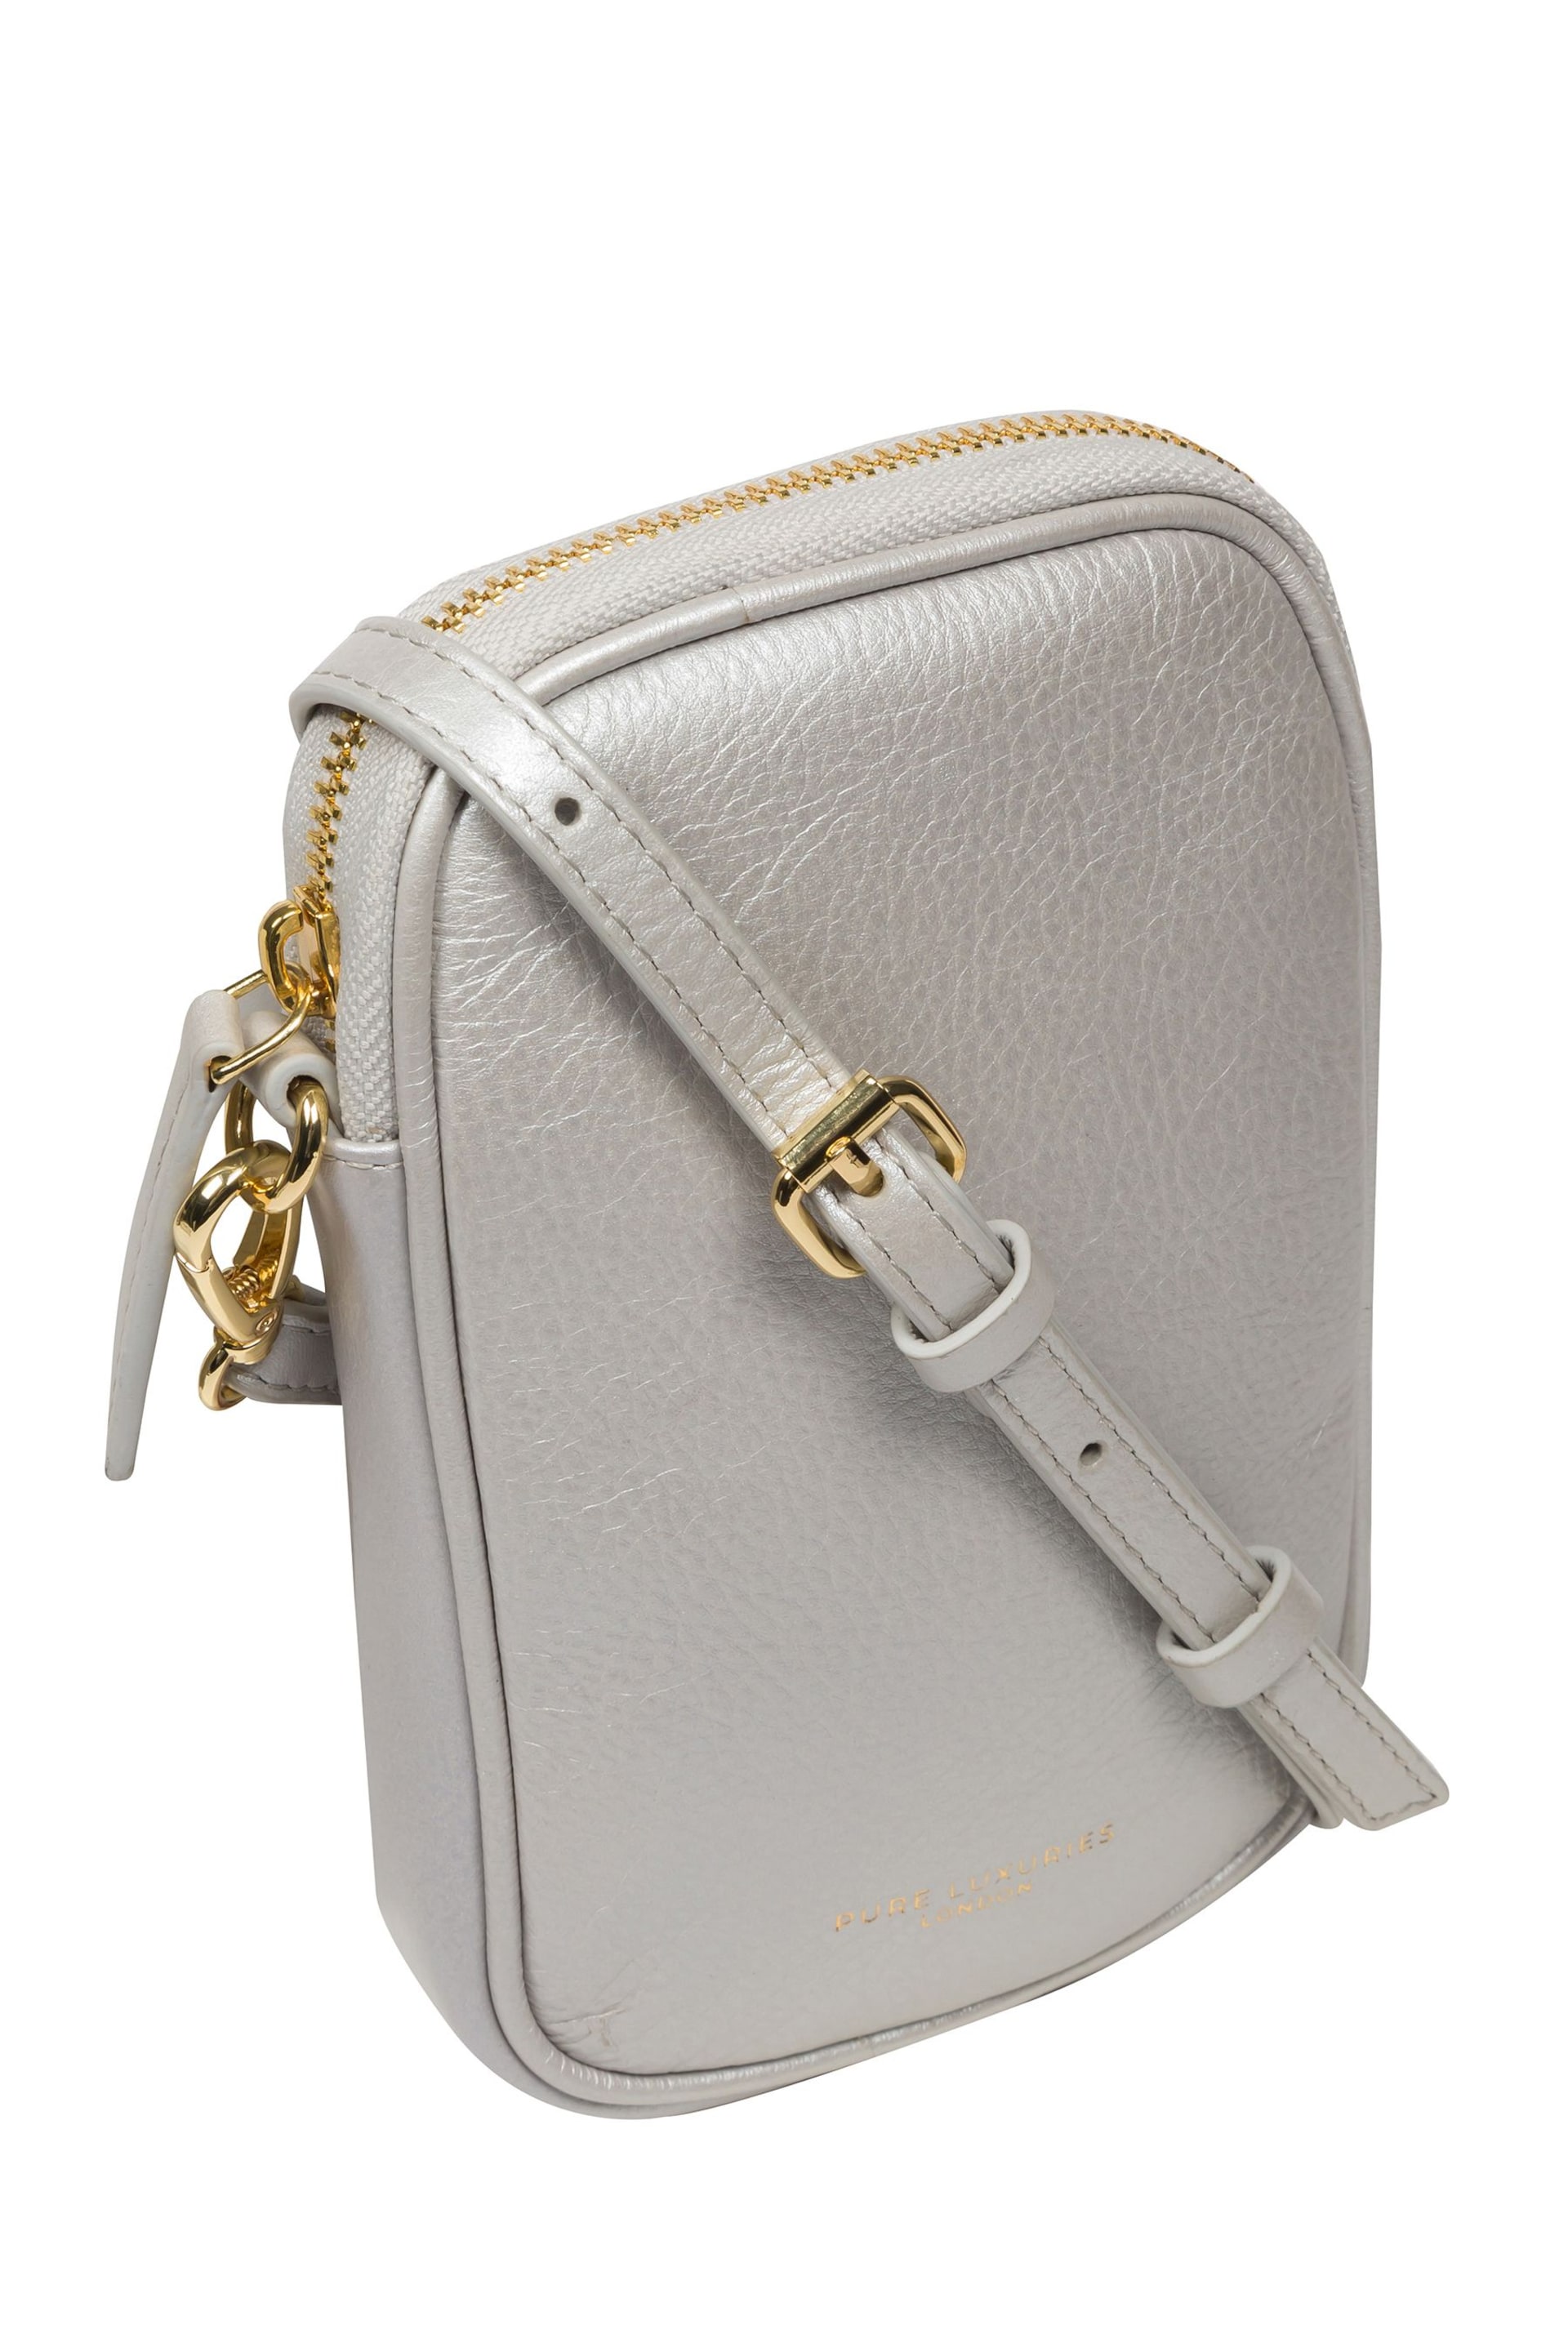 Pure Luxuries London Alaina Nappa Leather Cross-Body Phone Bag - Image 7 of 8